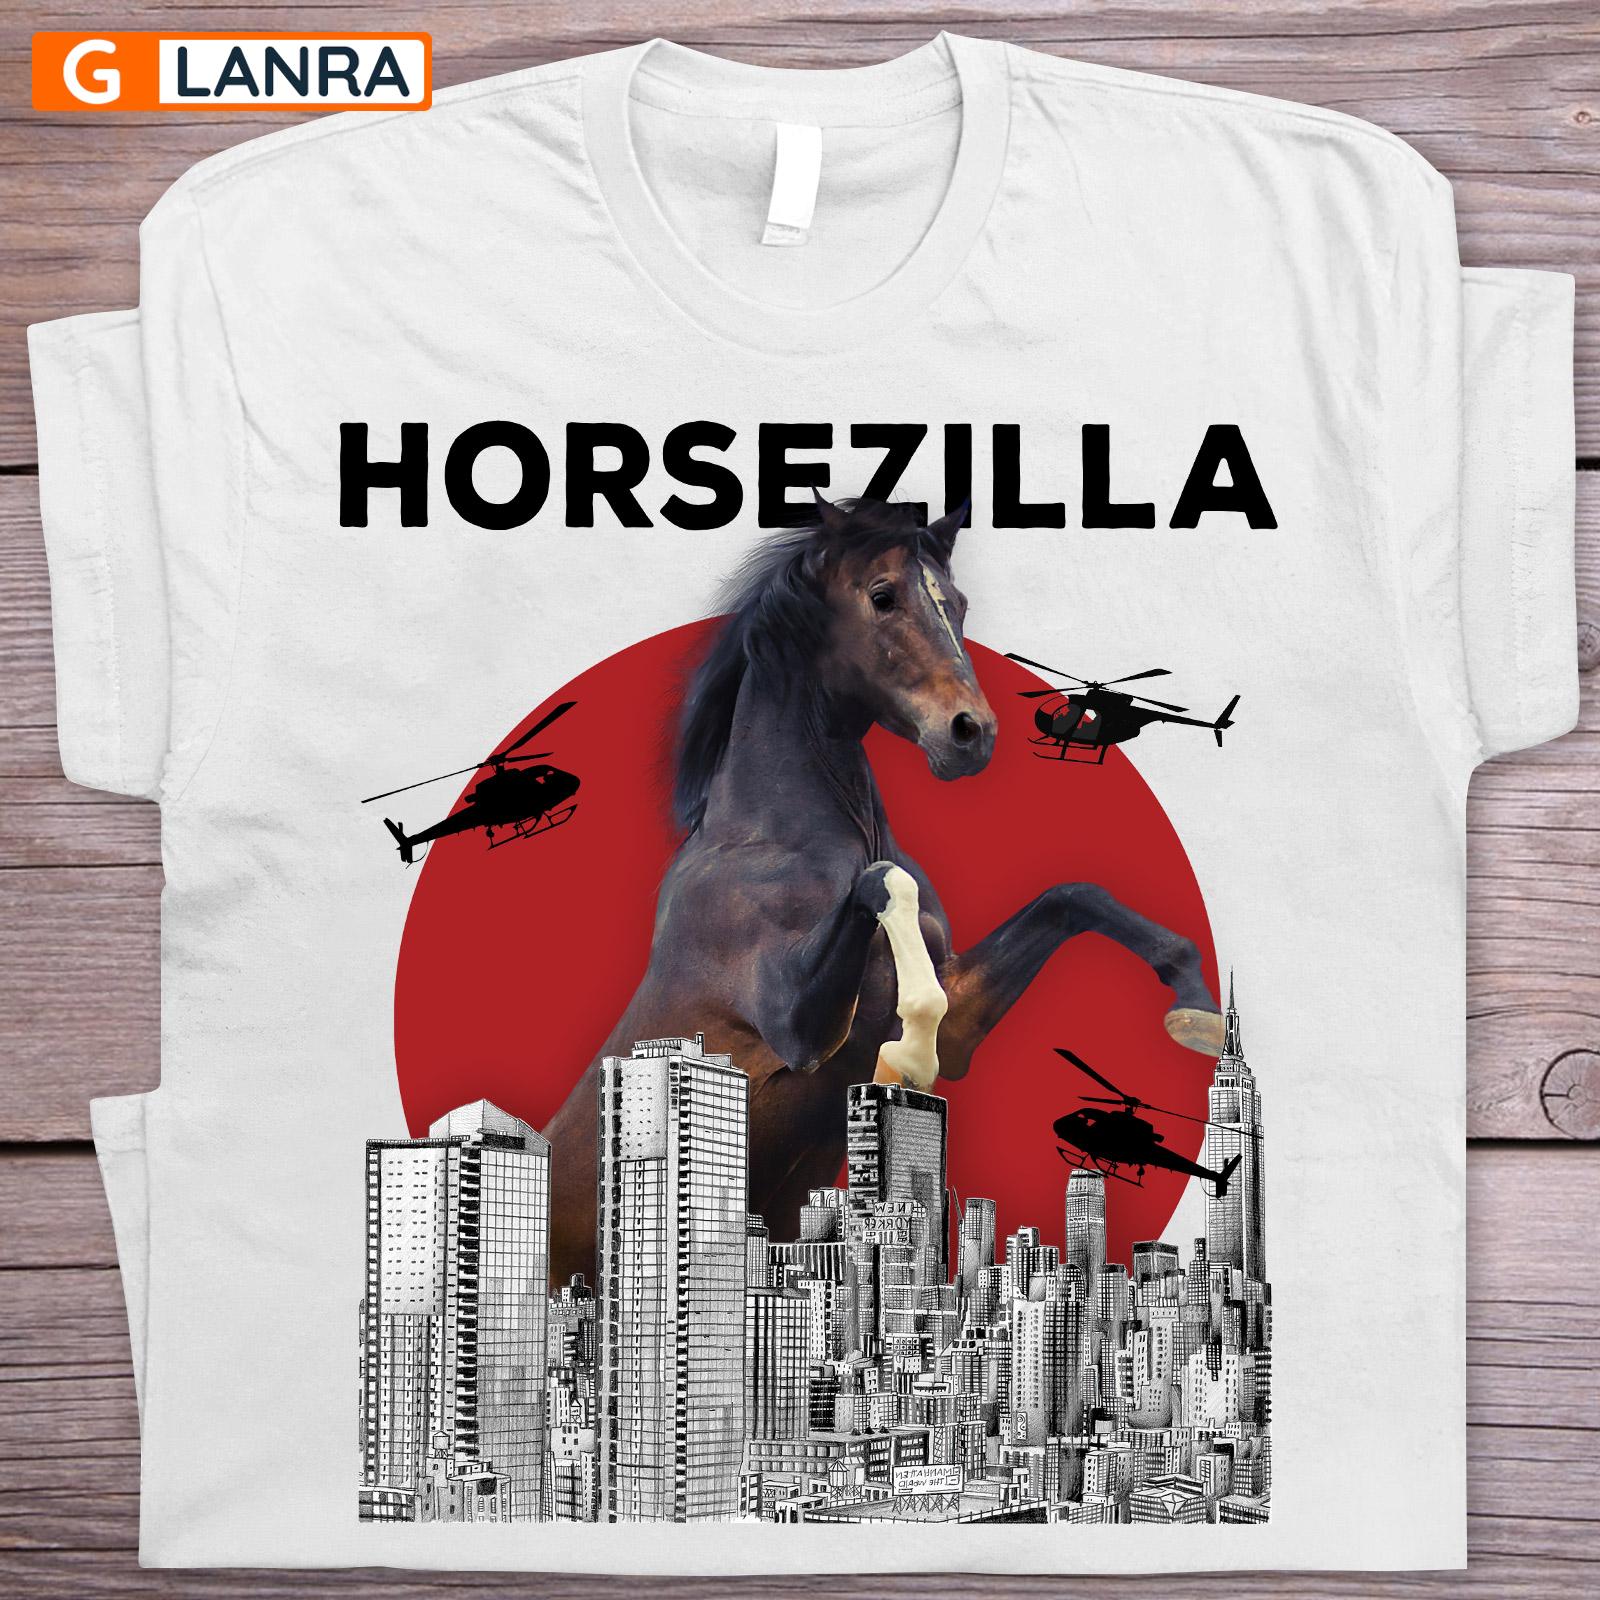 Horsezilla Shirt, Horse Shirt, Horse Farm Shirt, Farm Animal Shirt, Horse With Skyscraper And Helicopter Shirt, T-Shirt, Tee